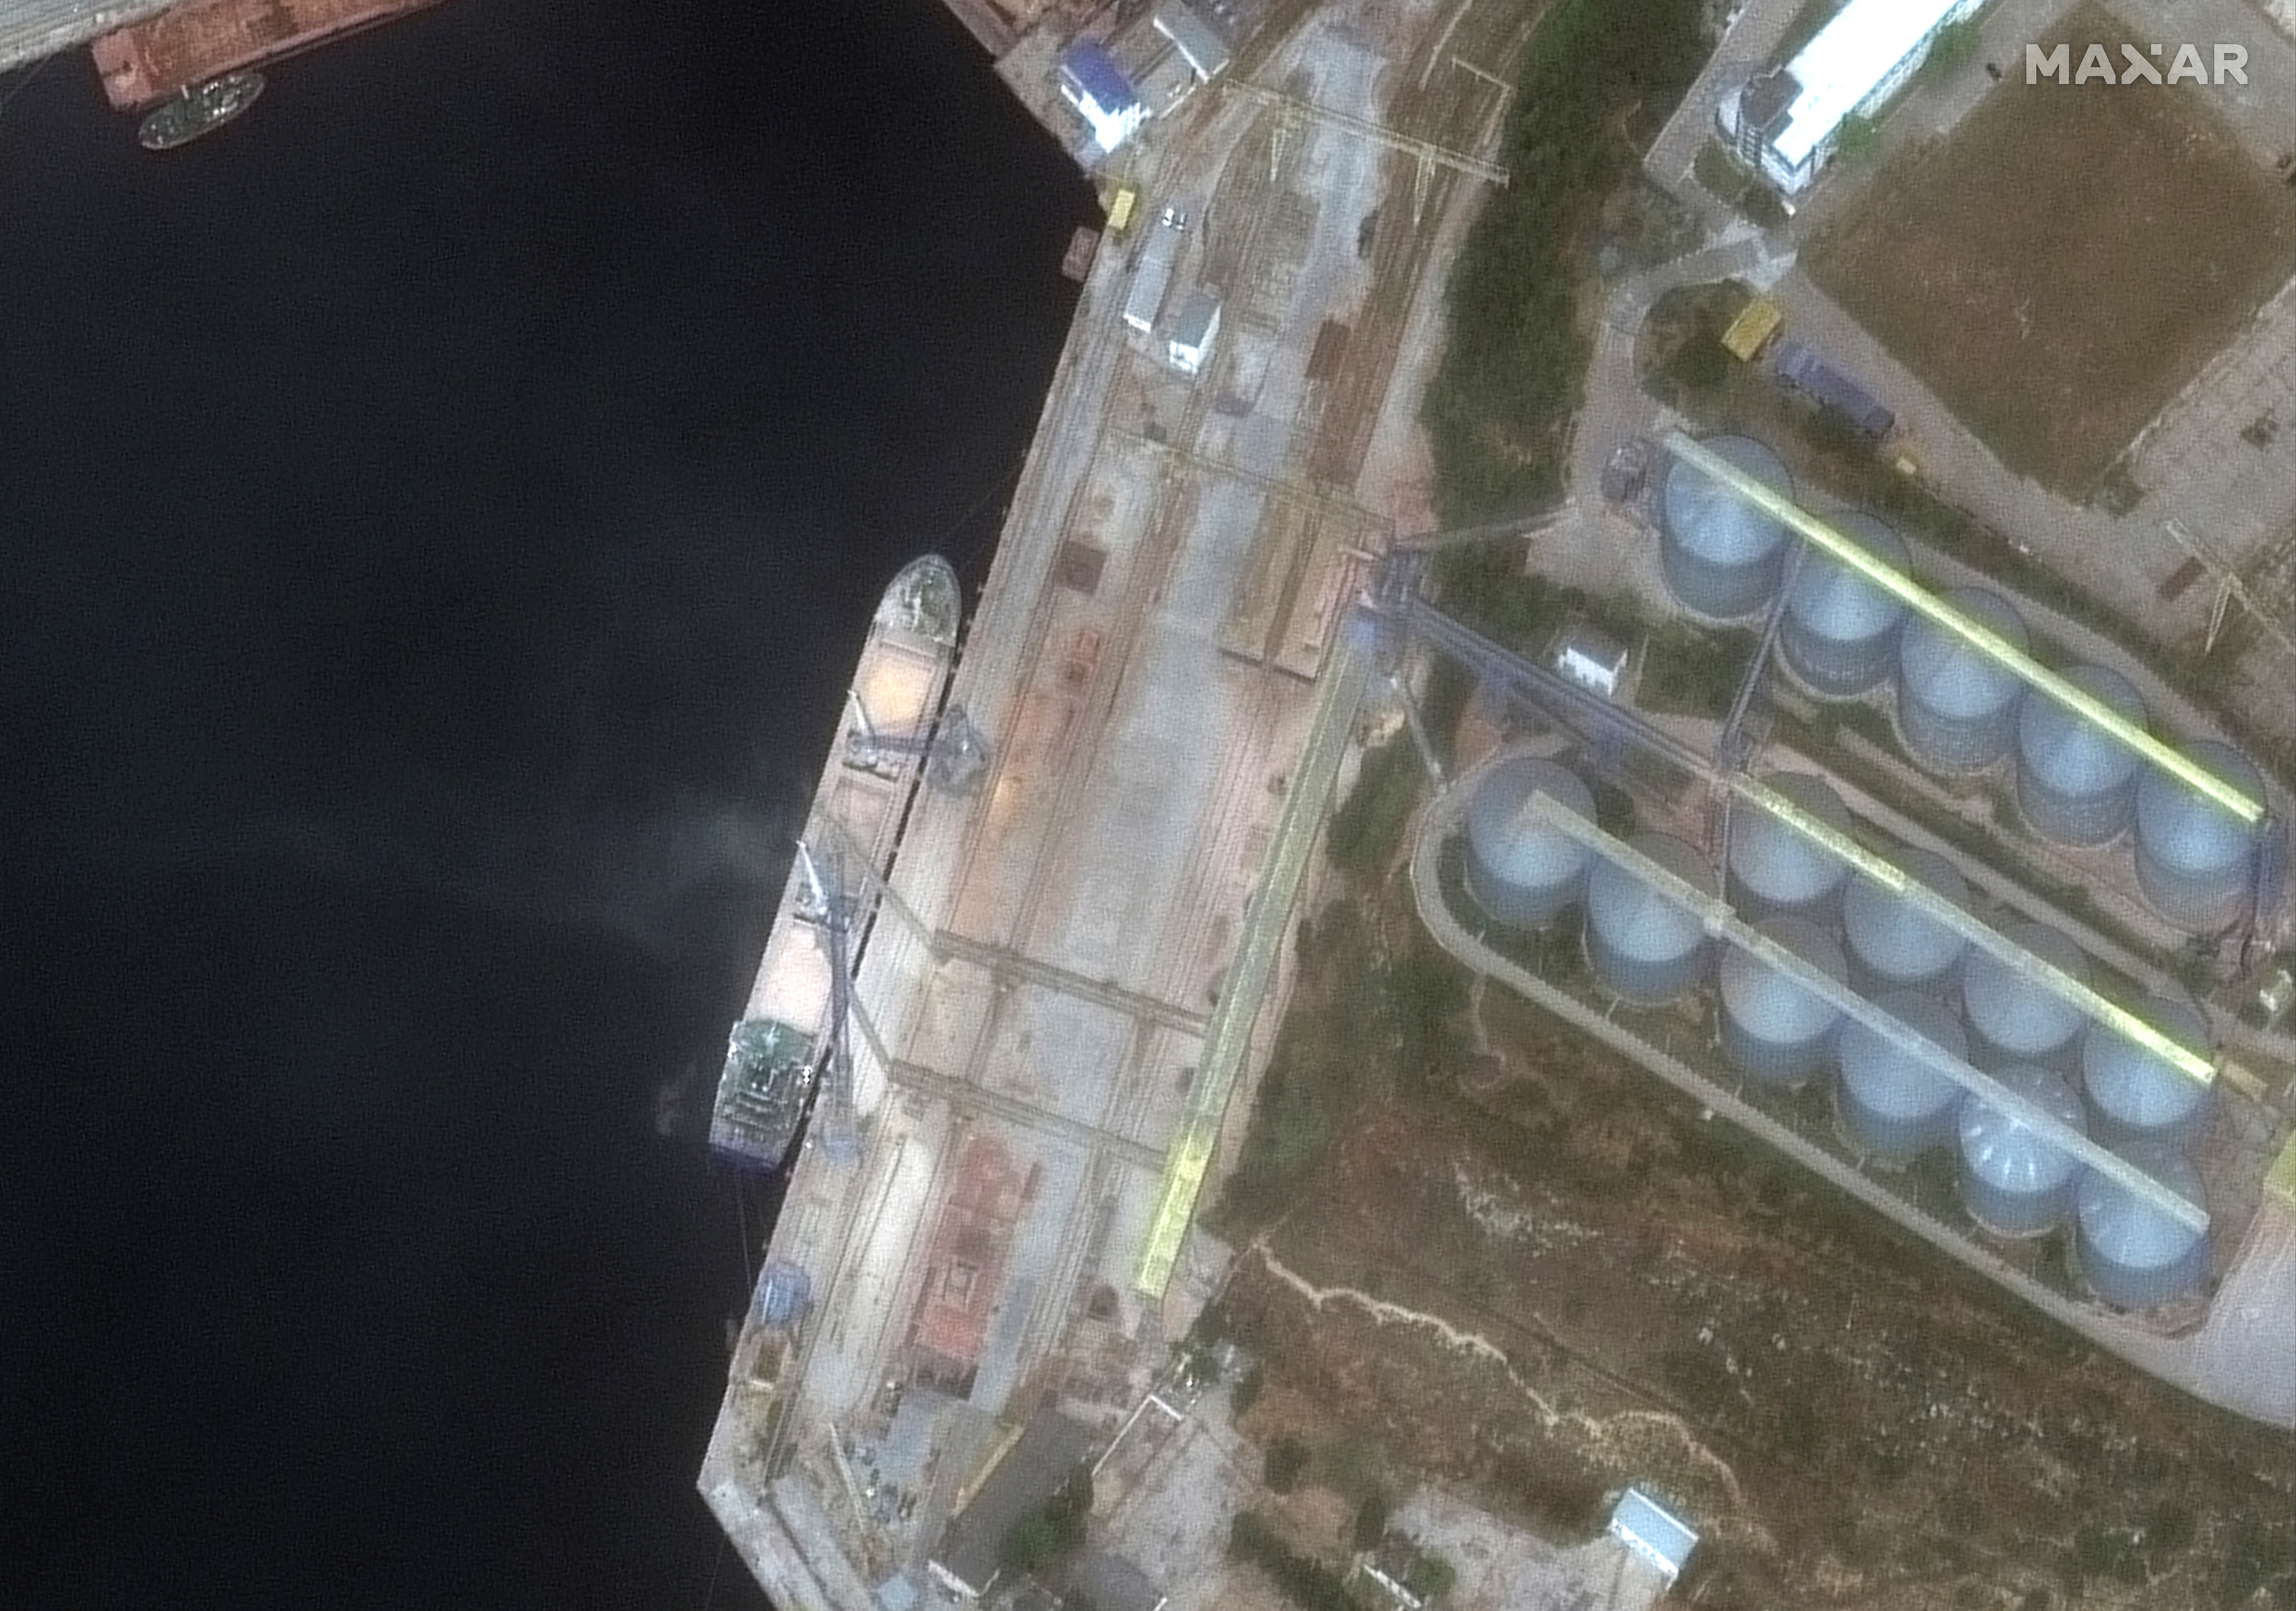 Satellite image shows a view of a ship loading grain, in Sevastopol